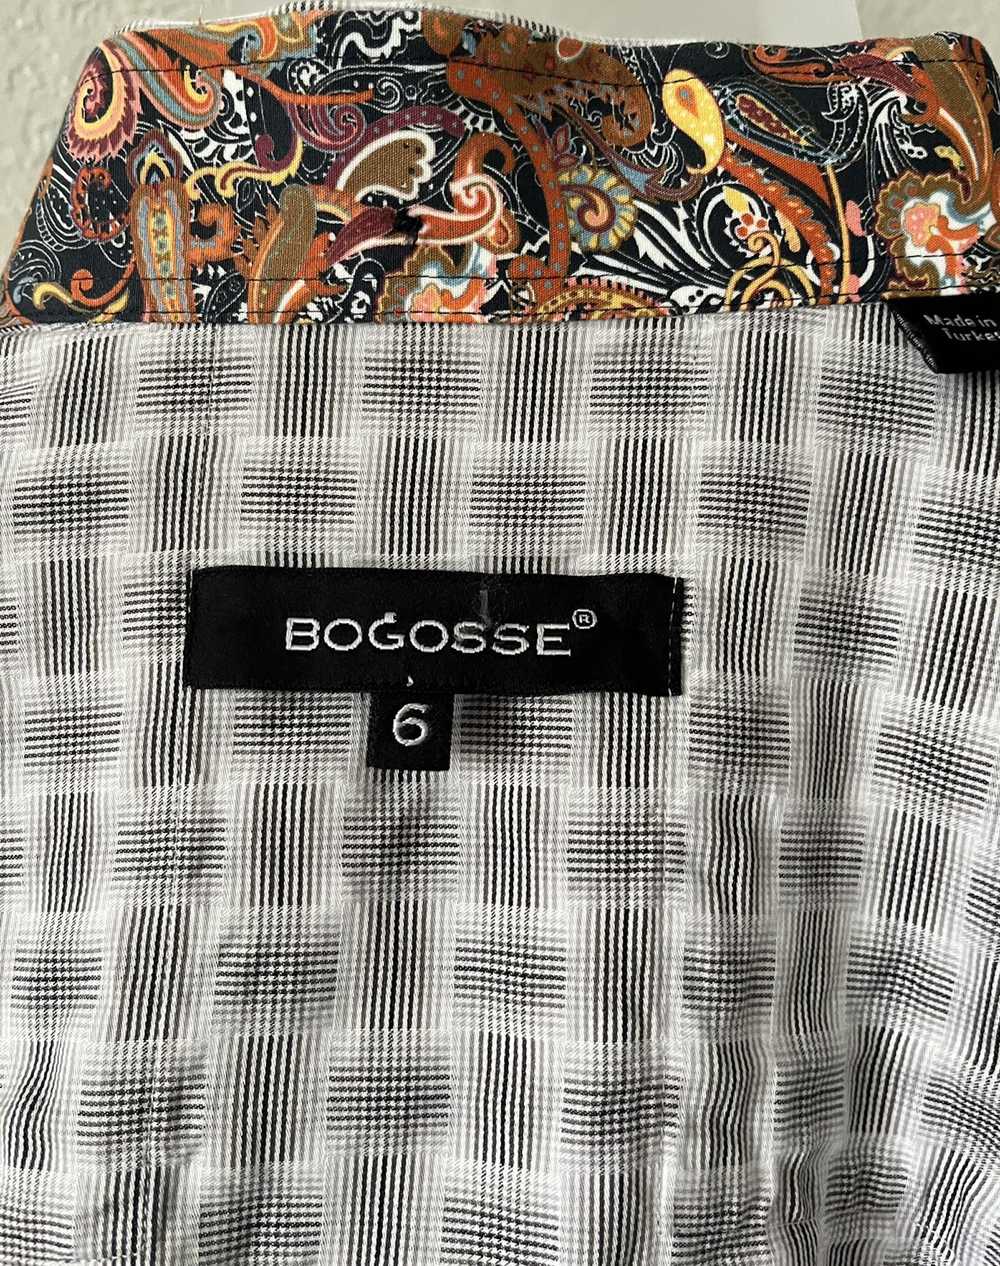 Bogosse BOGOSSE Printed Men's Long Sleeve Shirt - image 9